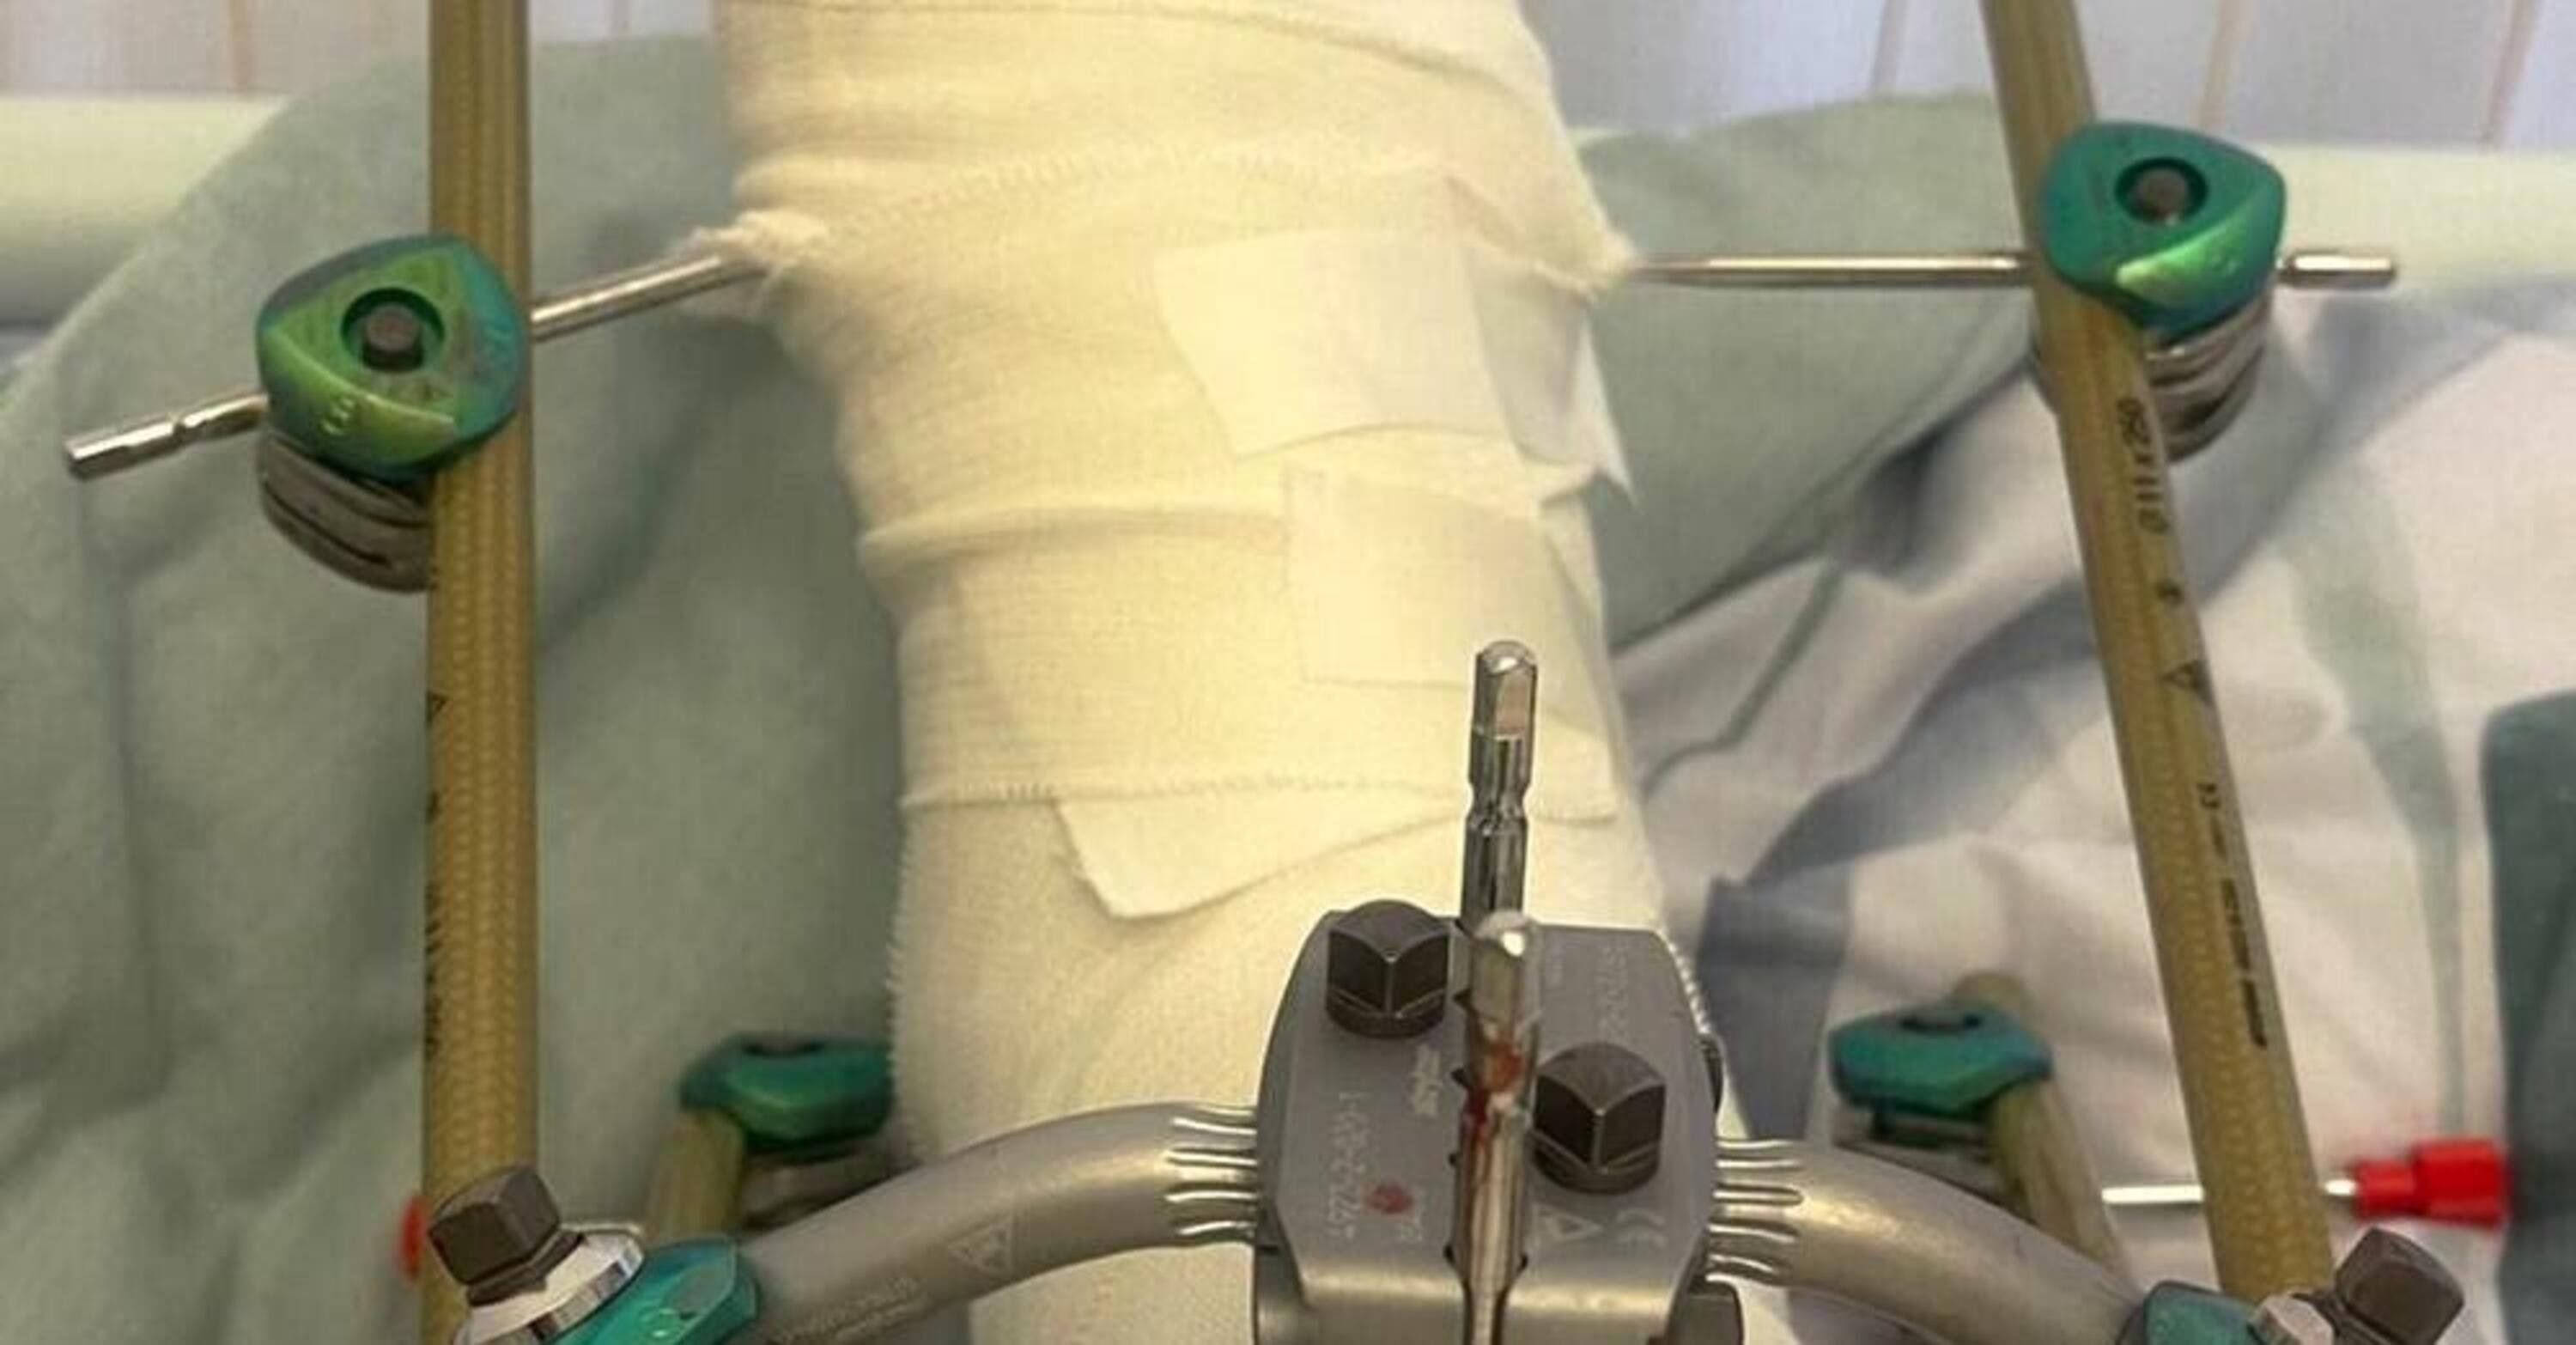 SBK. Michael Van der Mark si frattura una gamba in mountain bike